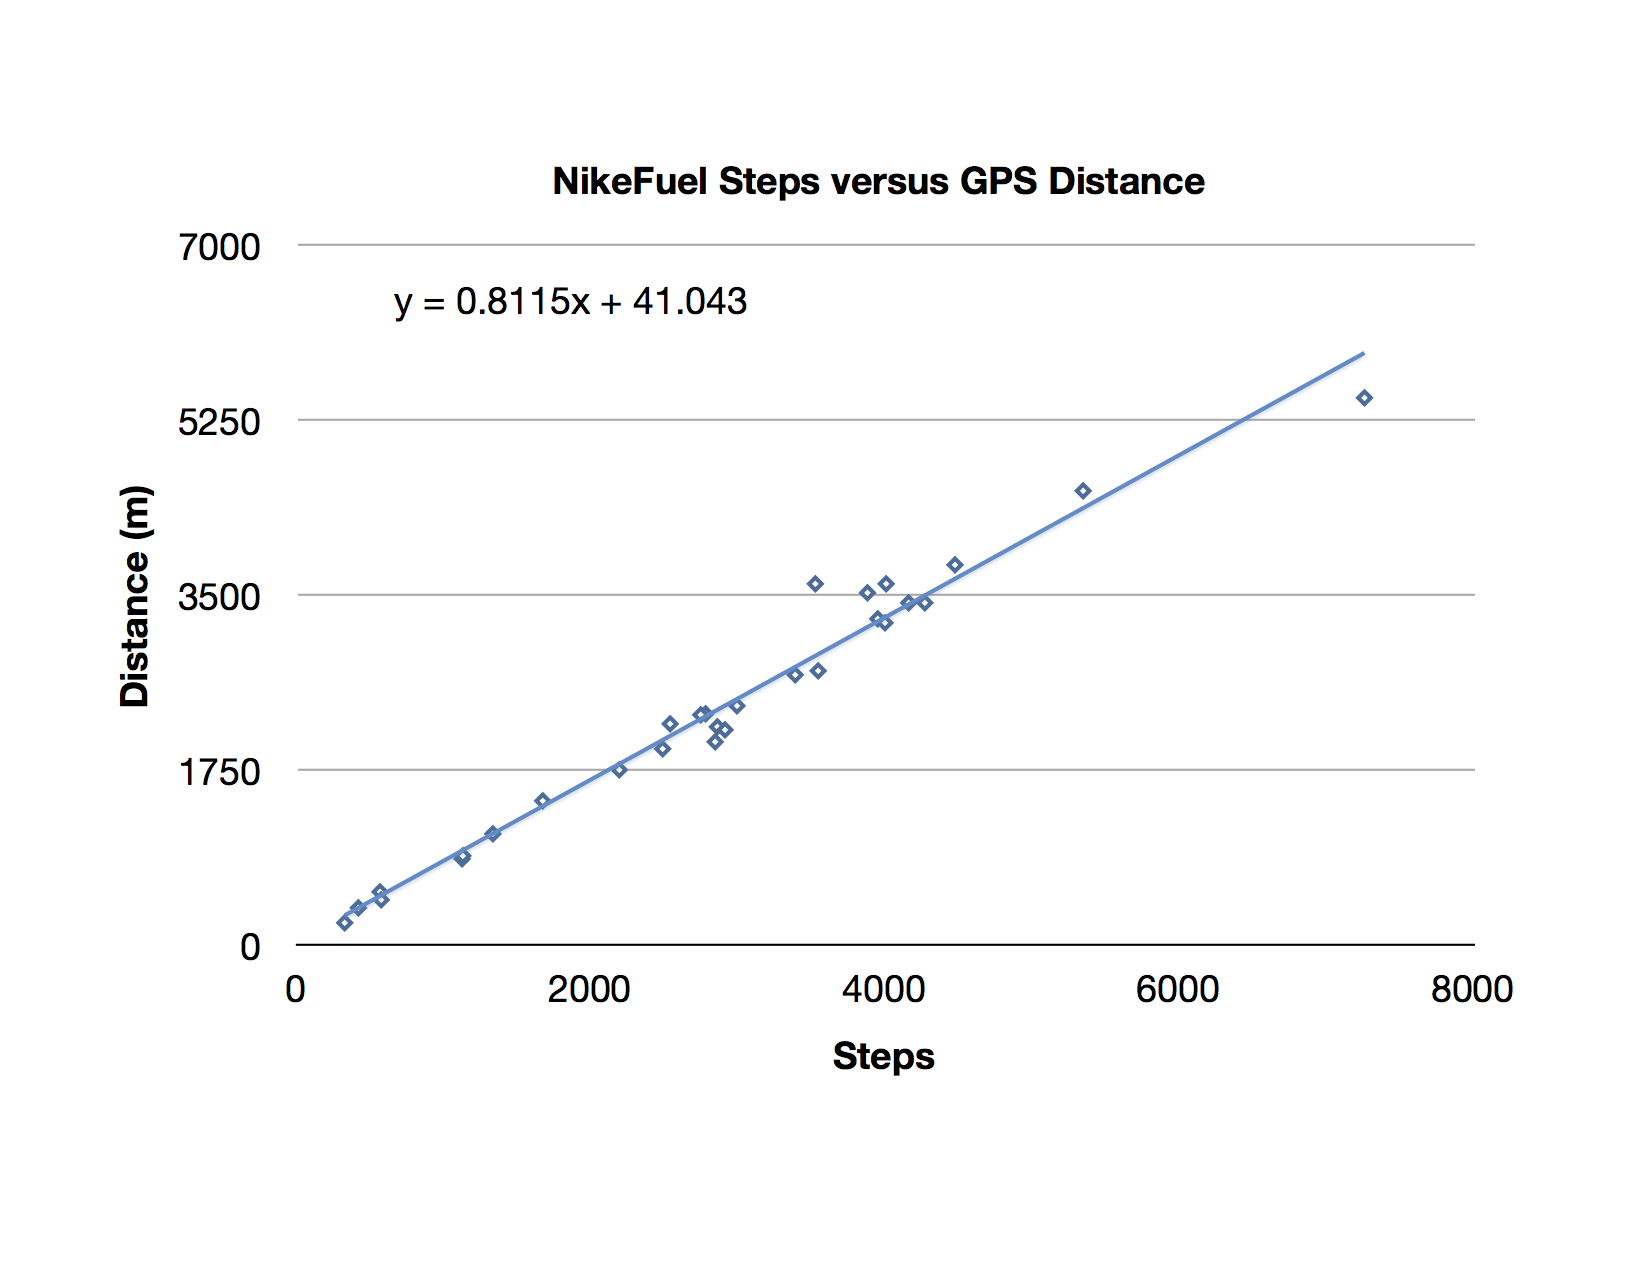 NikeFuel Band Distance versus steps